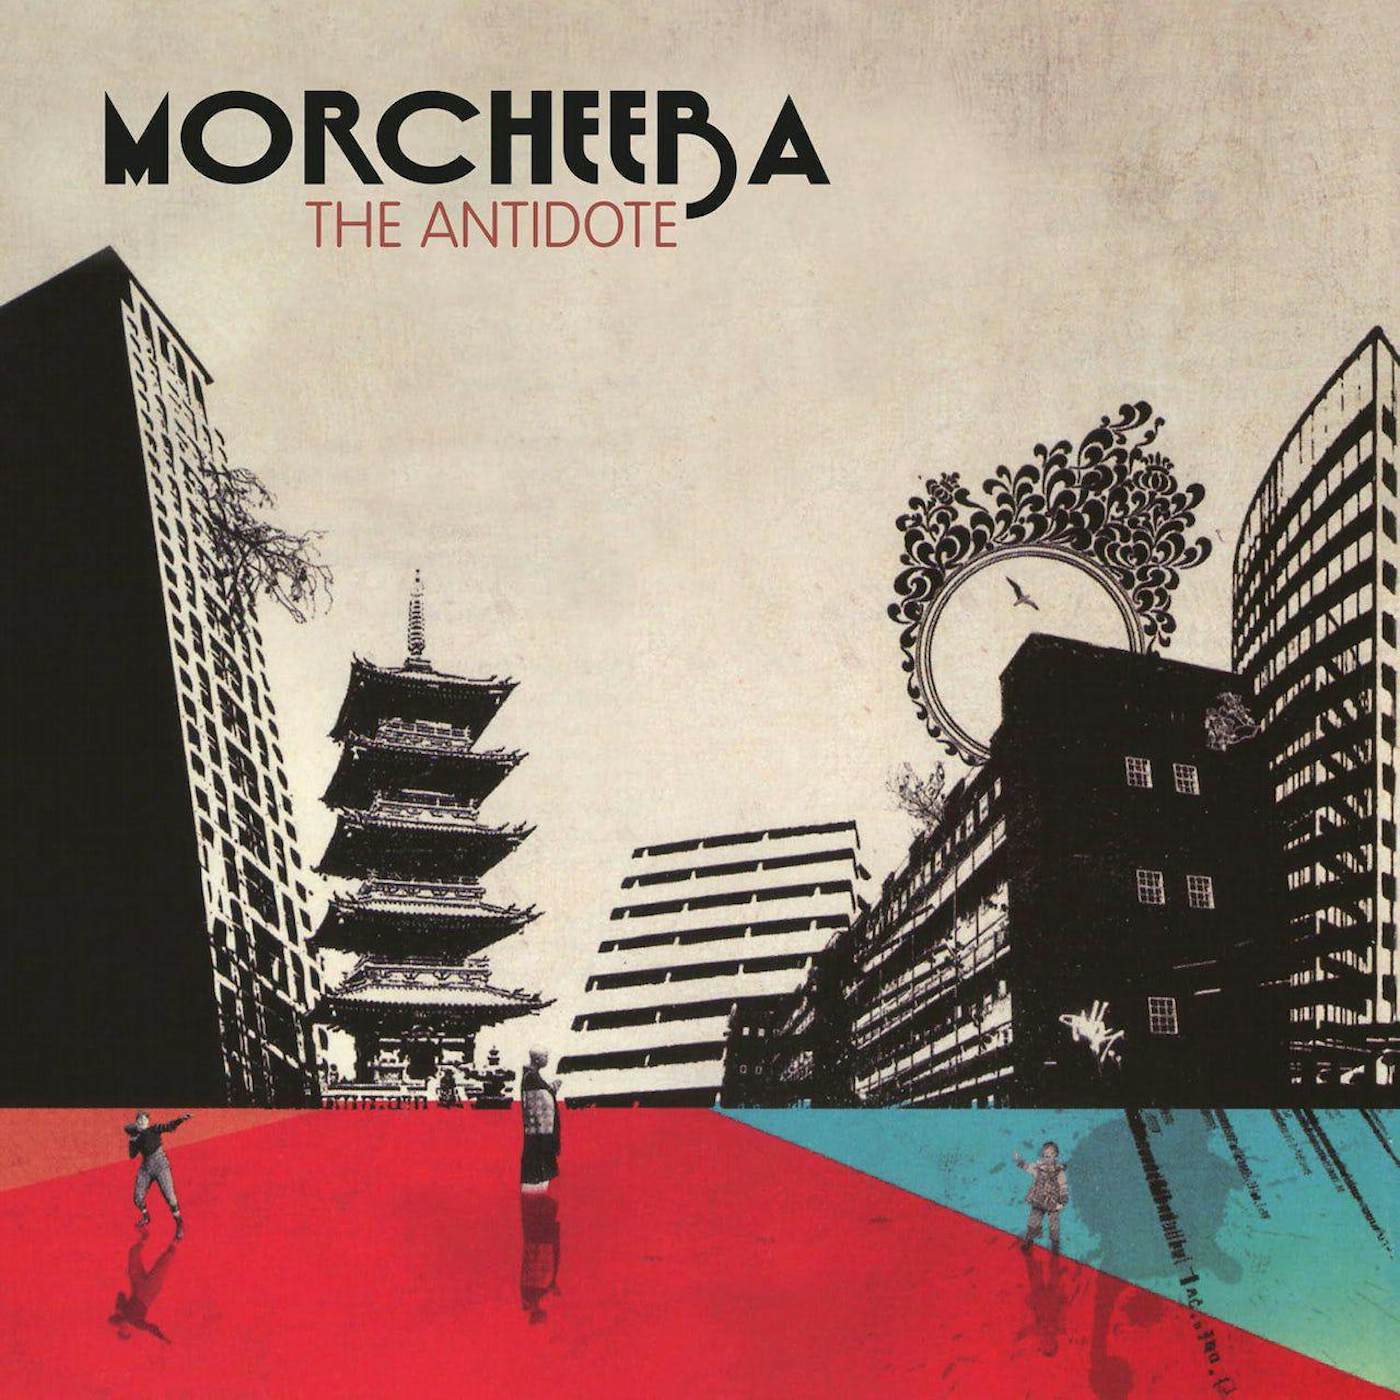 Morcheeba Antidote (Crystal Clear/180g) Vinyl Record